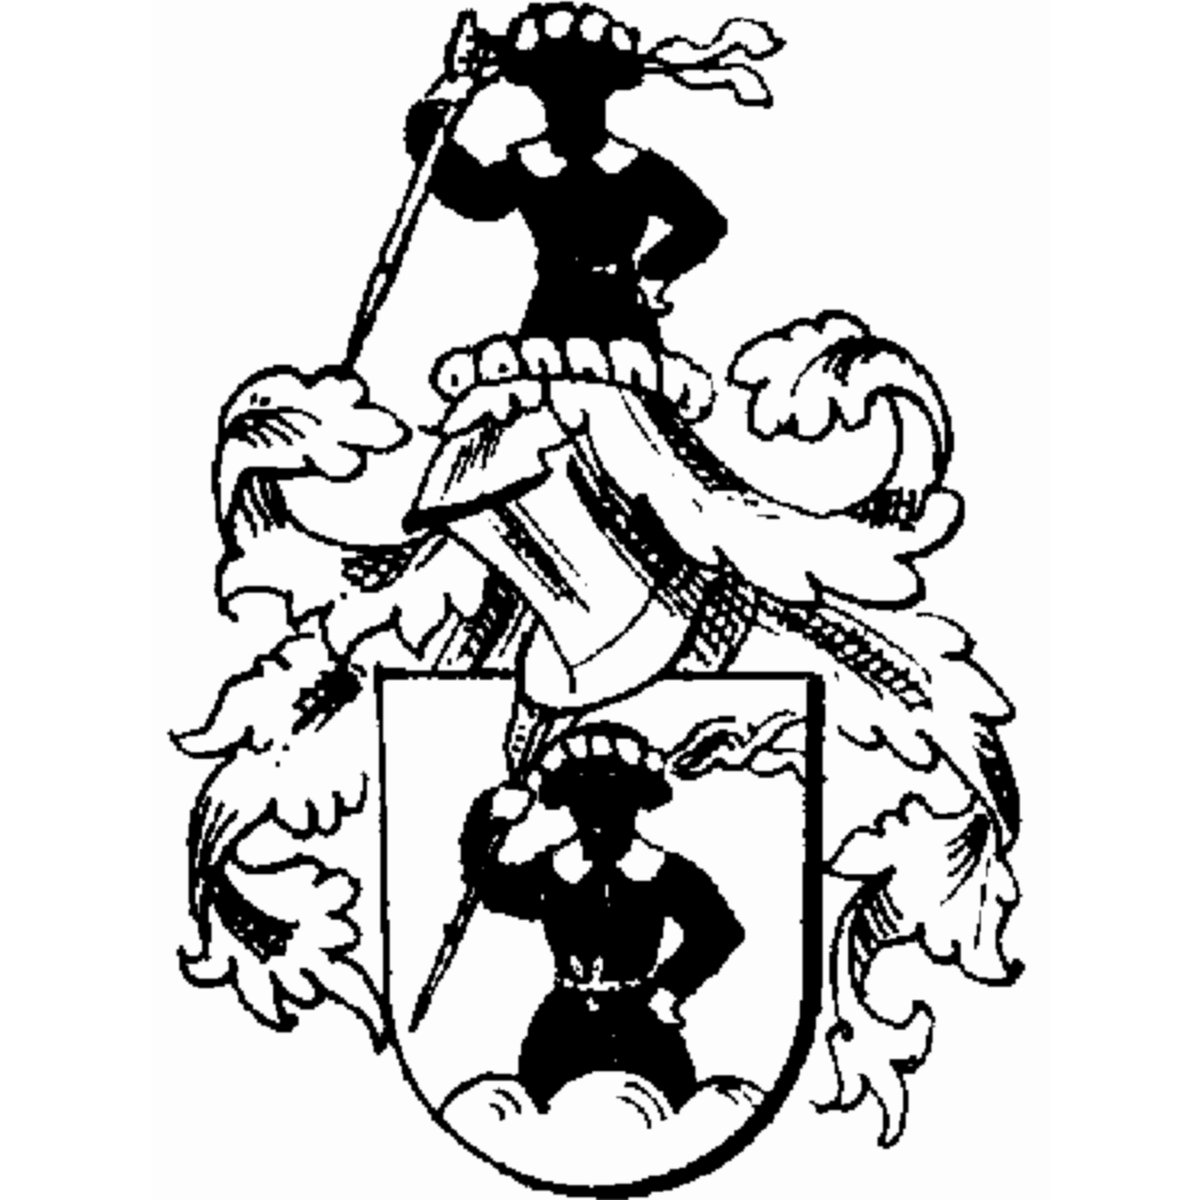 Wappen der Familie Robin